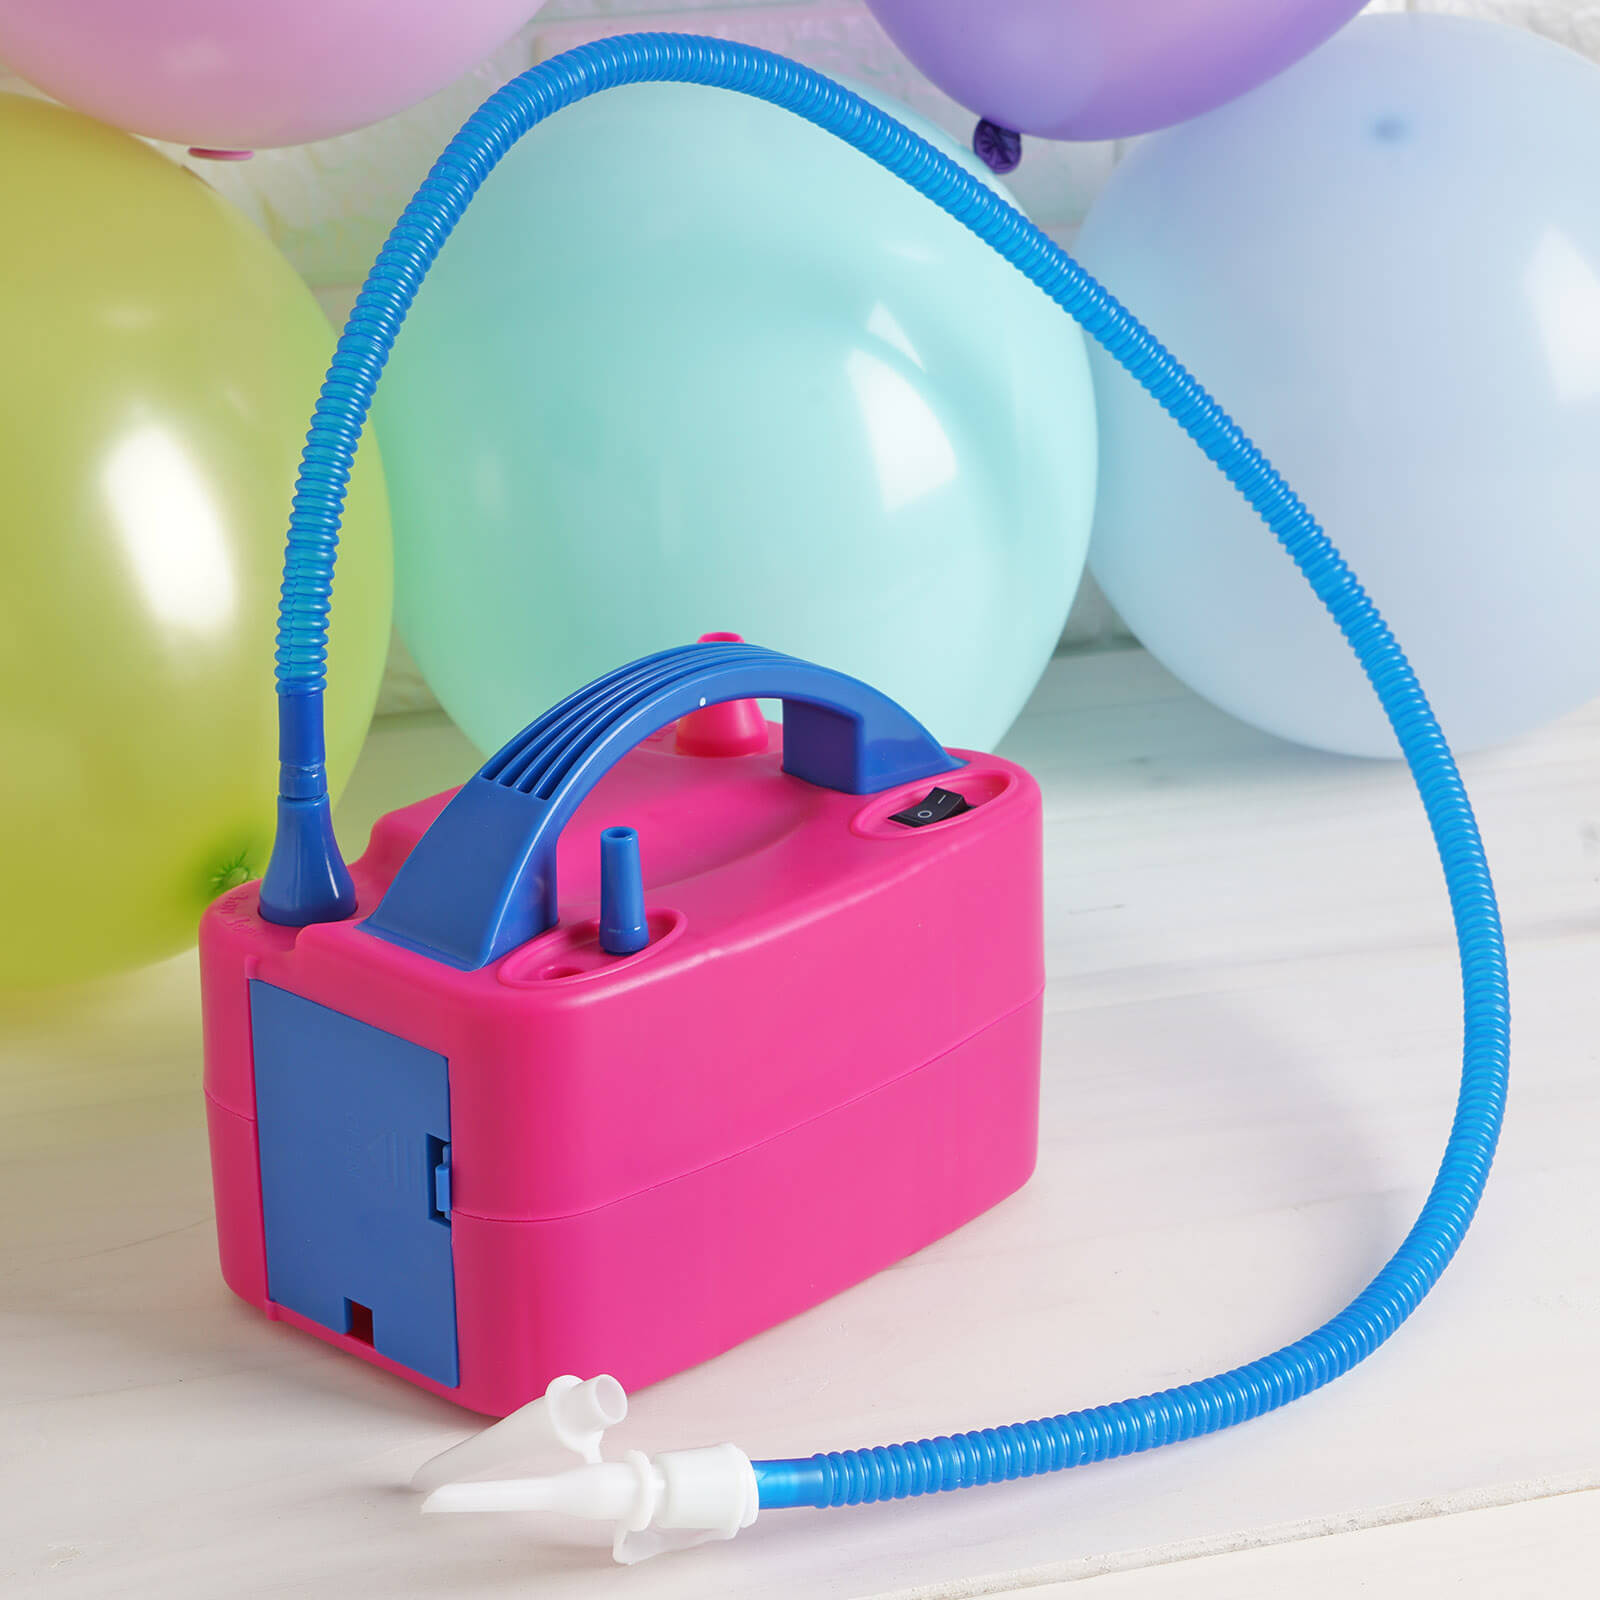 Balloon Pump, Baloon Inflators Machine, Ballon Air Pumper, Electric Balloon  Pump Kit, Electric Balloon Air Pump + 80 Party Colored Balloons